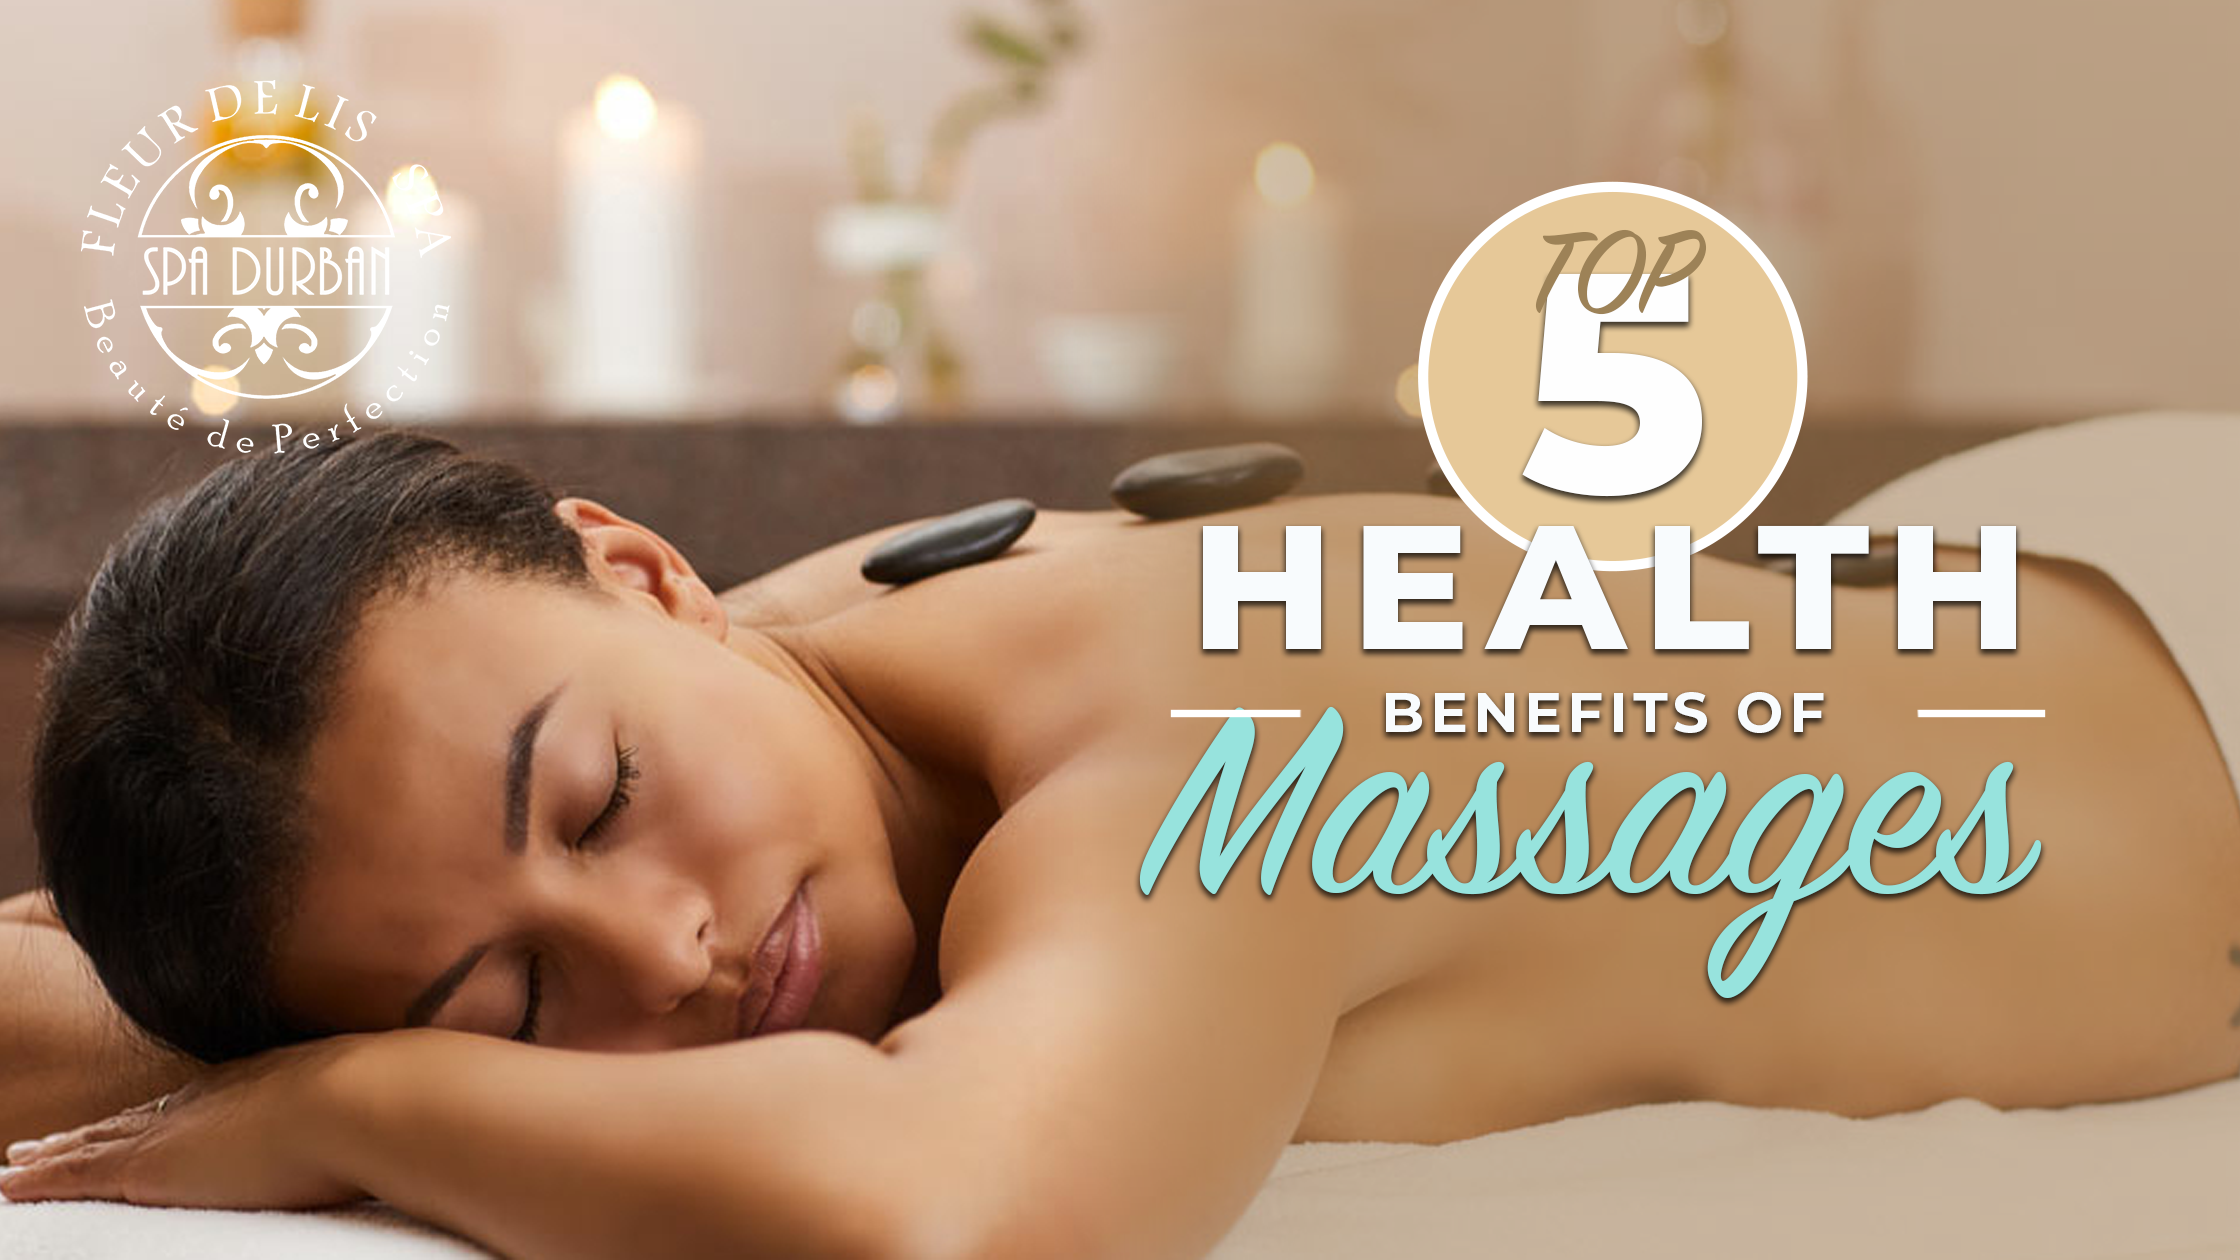 Top 5 Health Benefits of Massages